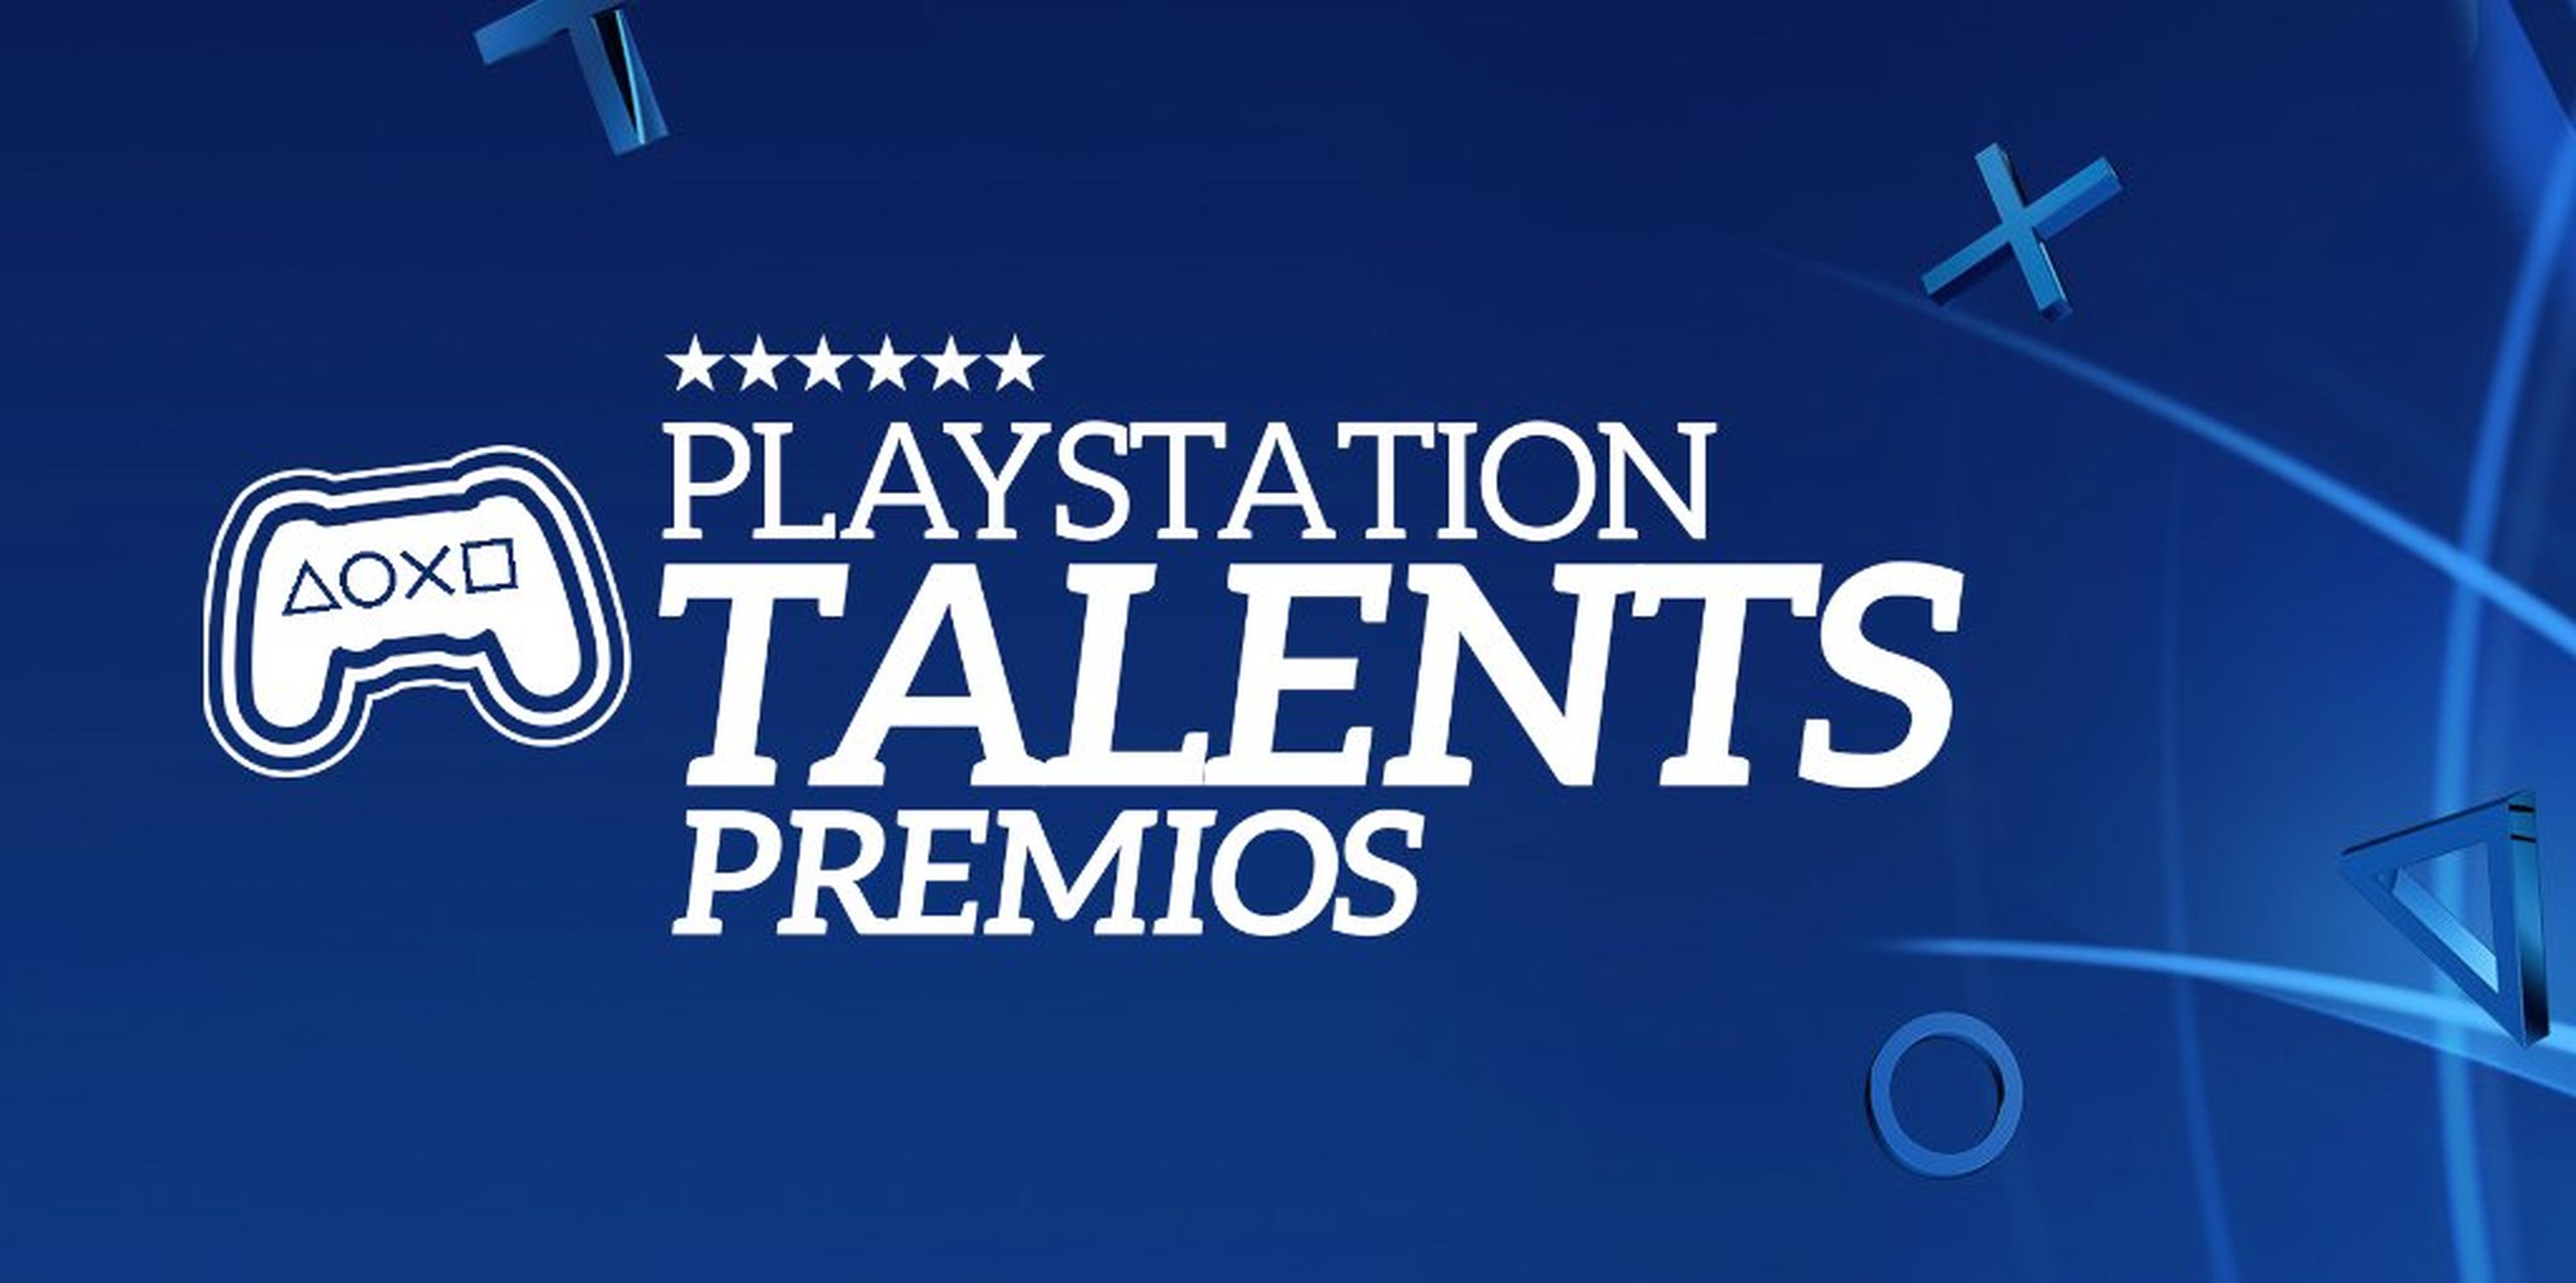 PlayStation Talents Premios